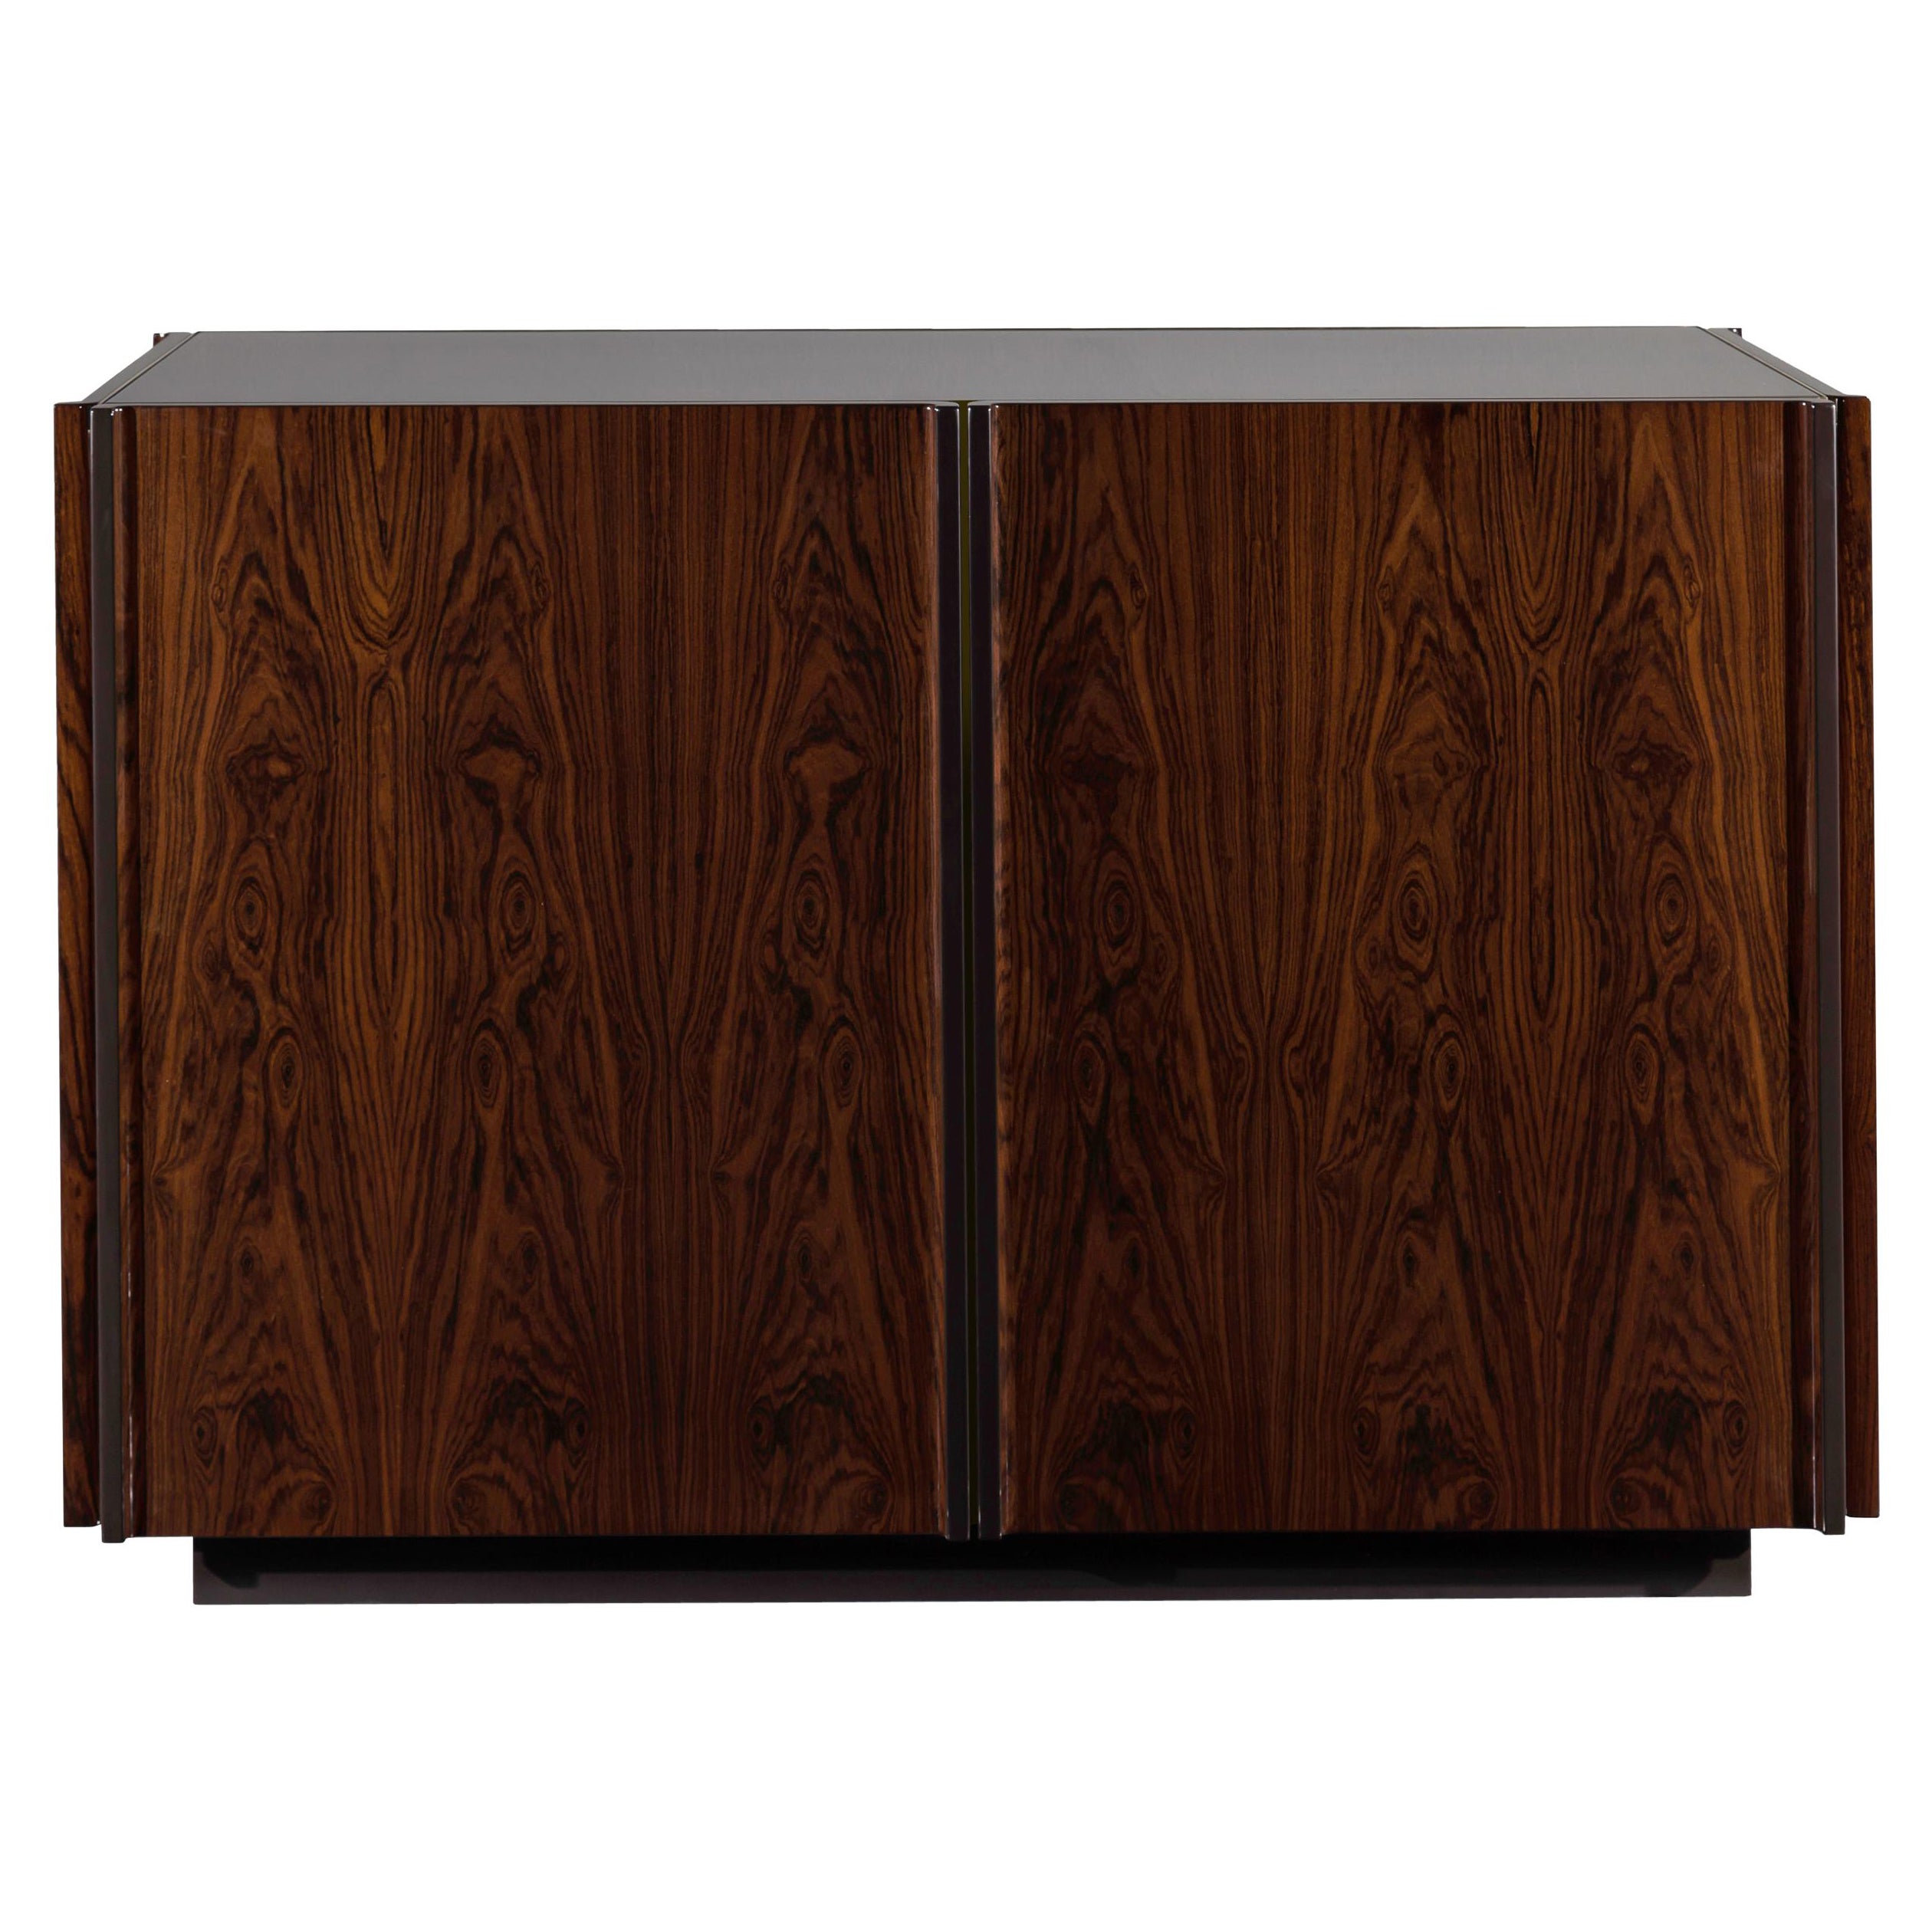 Oscar Credenza Natural Wood Handmaid Details Luxury Furniture 120